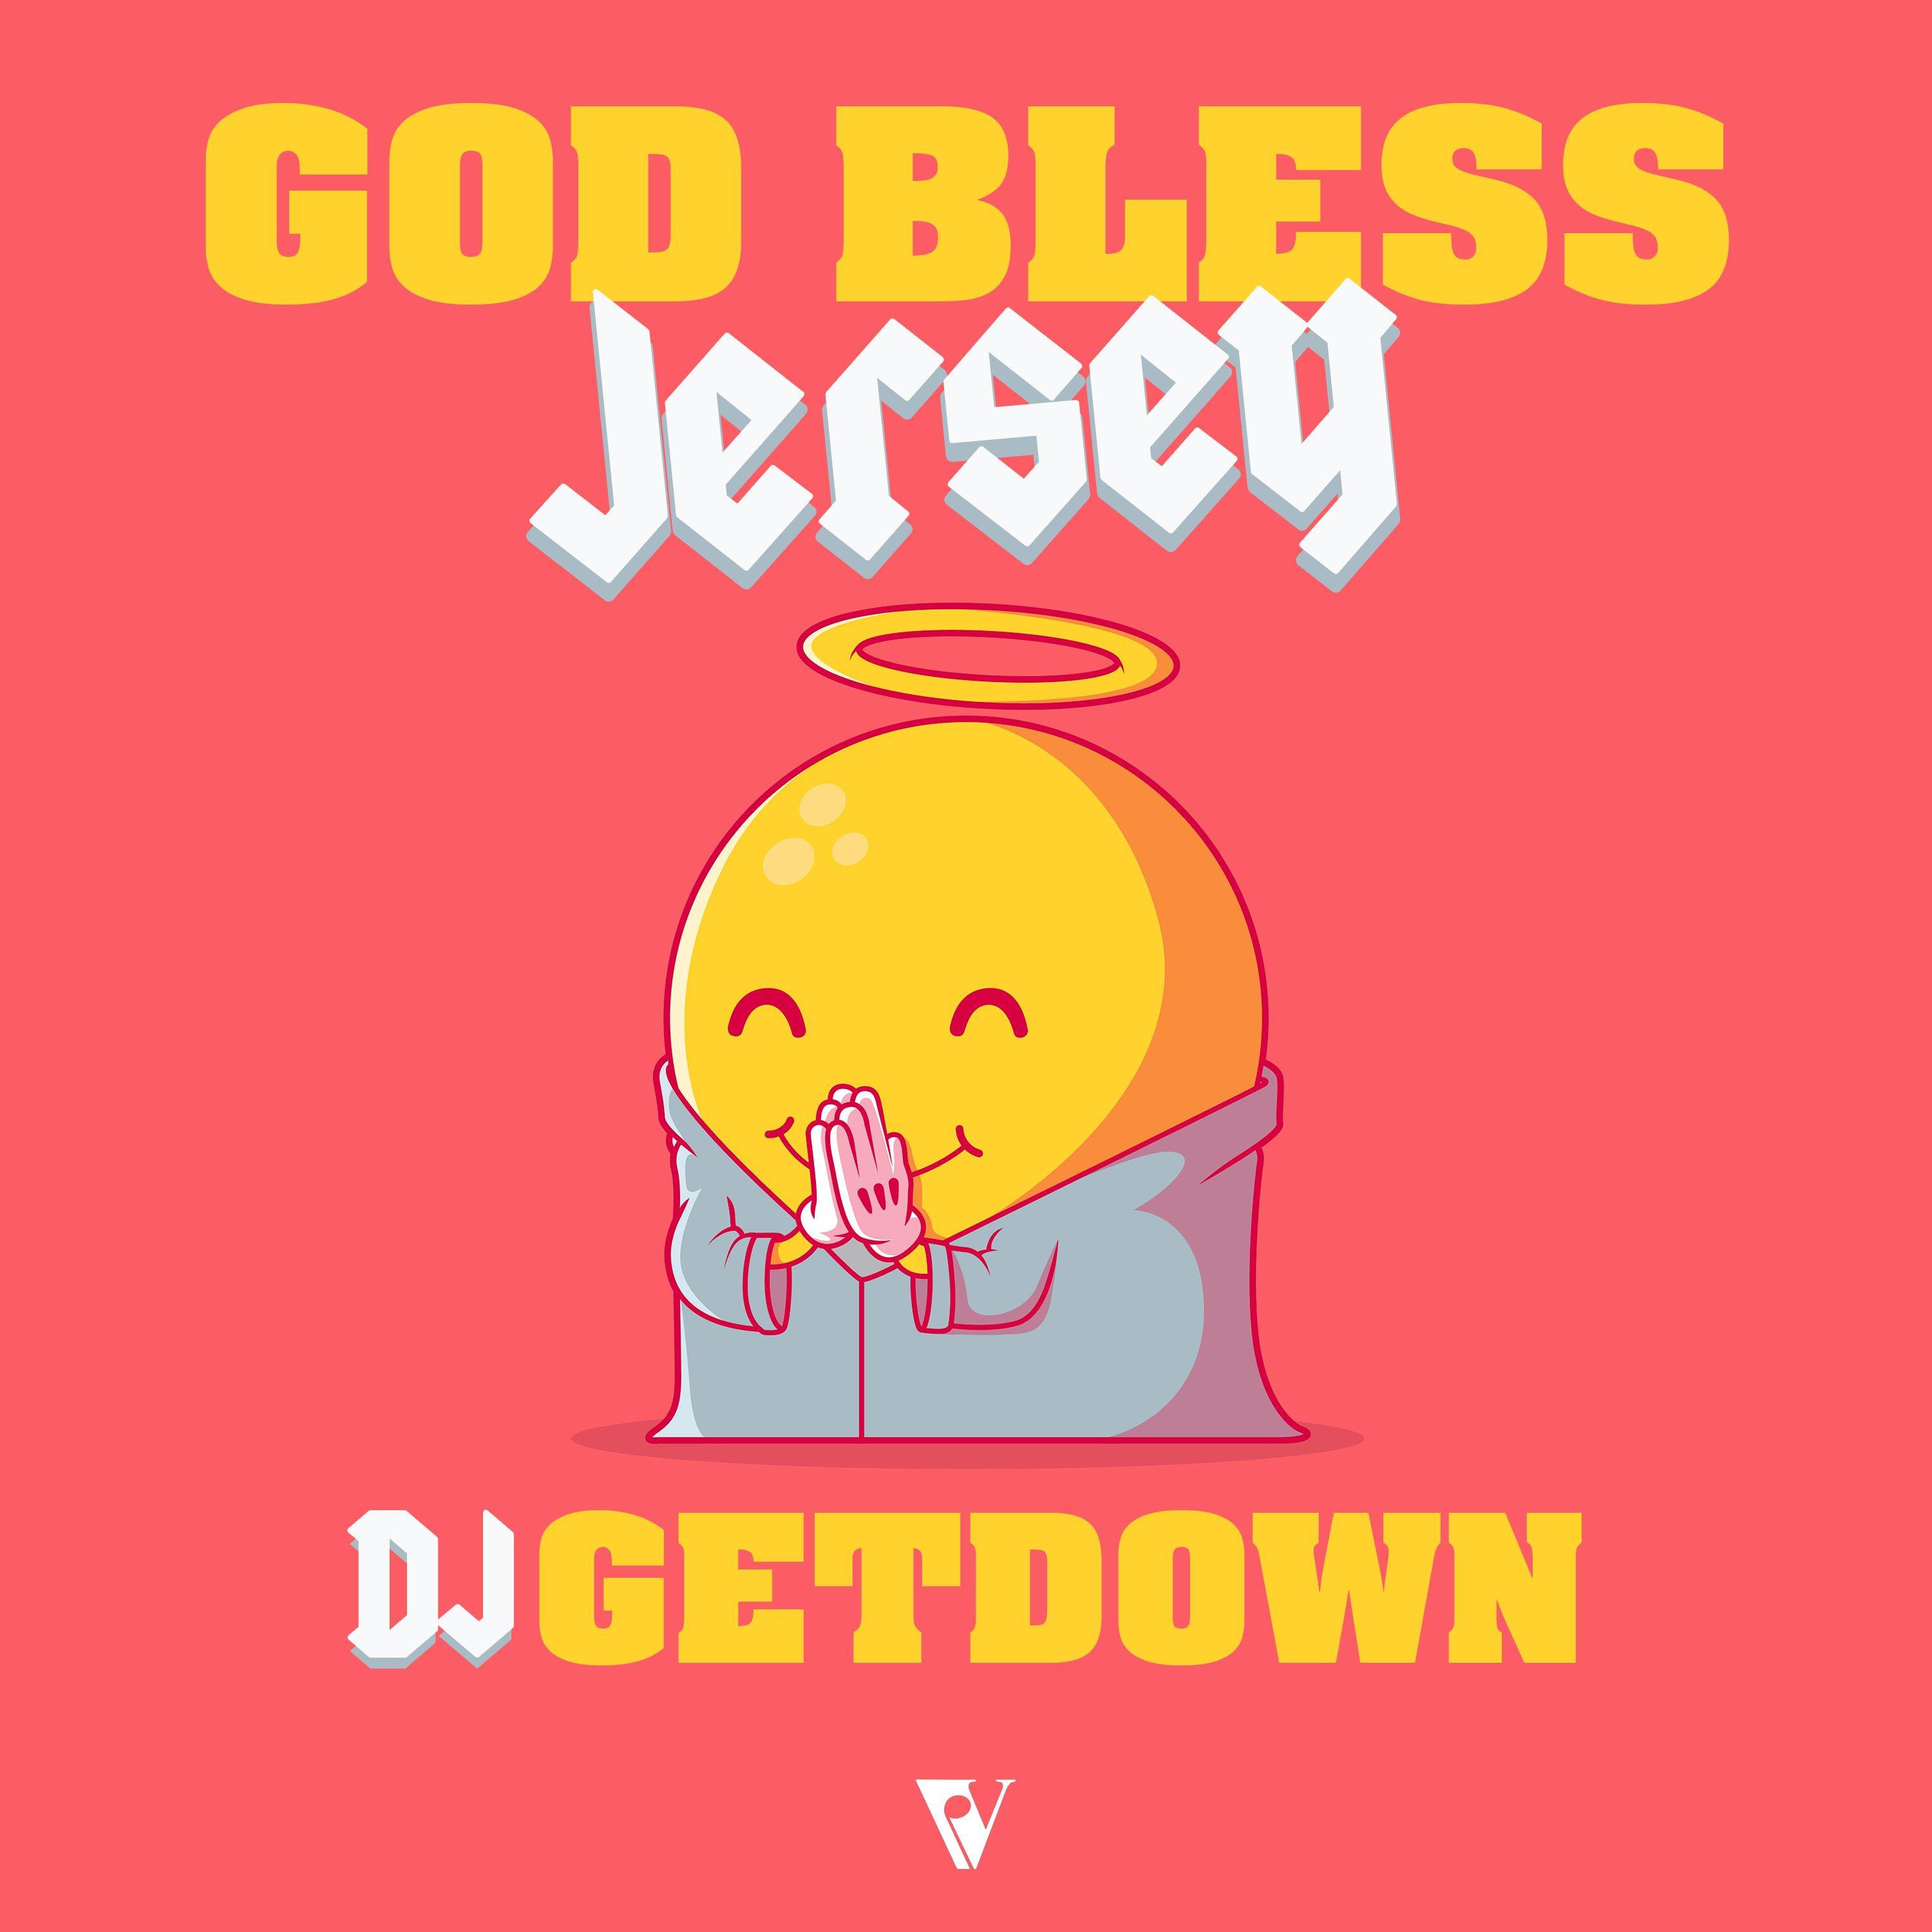 Dj Getdown - God Bless Jersey